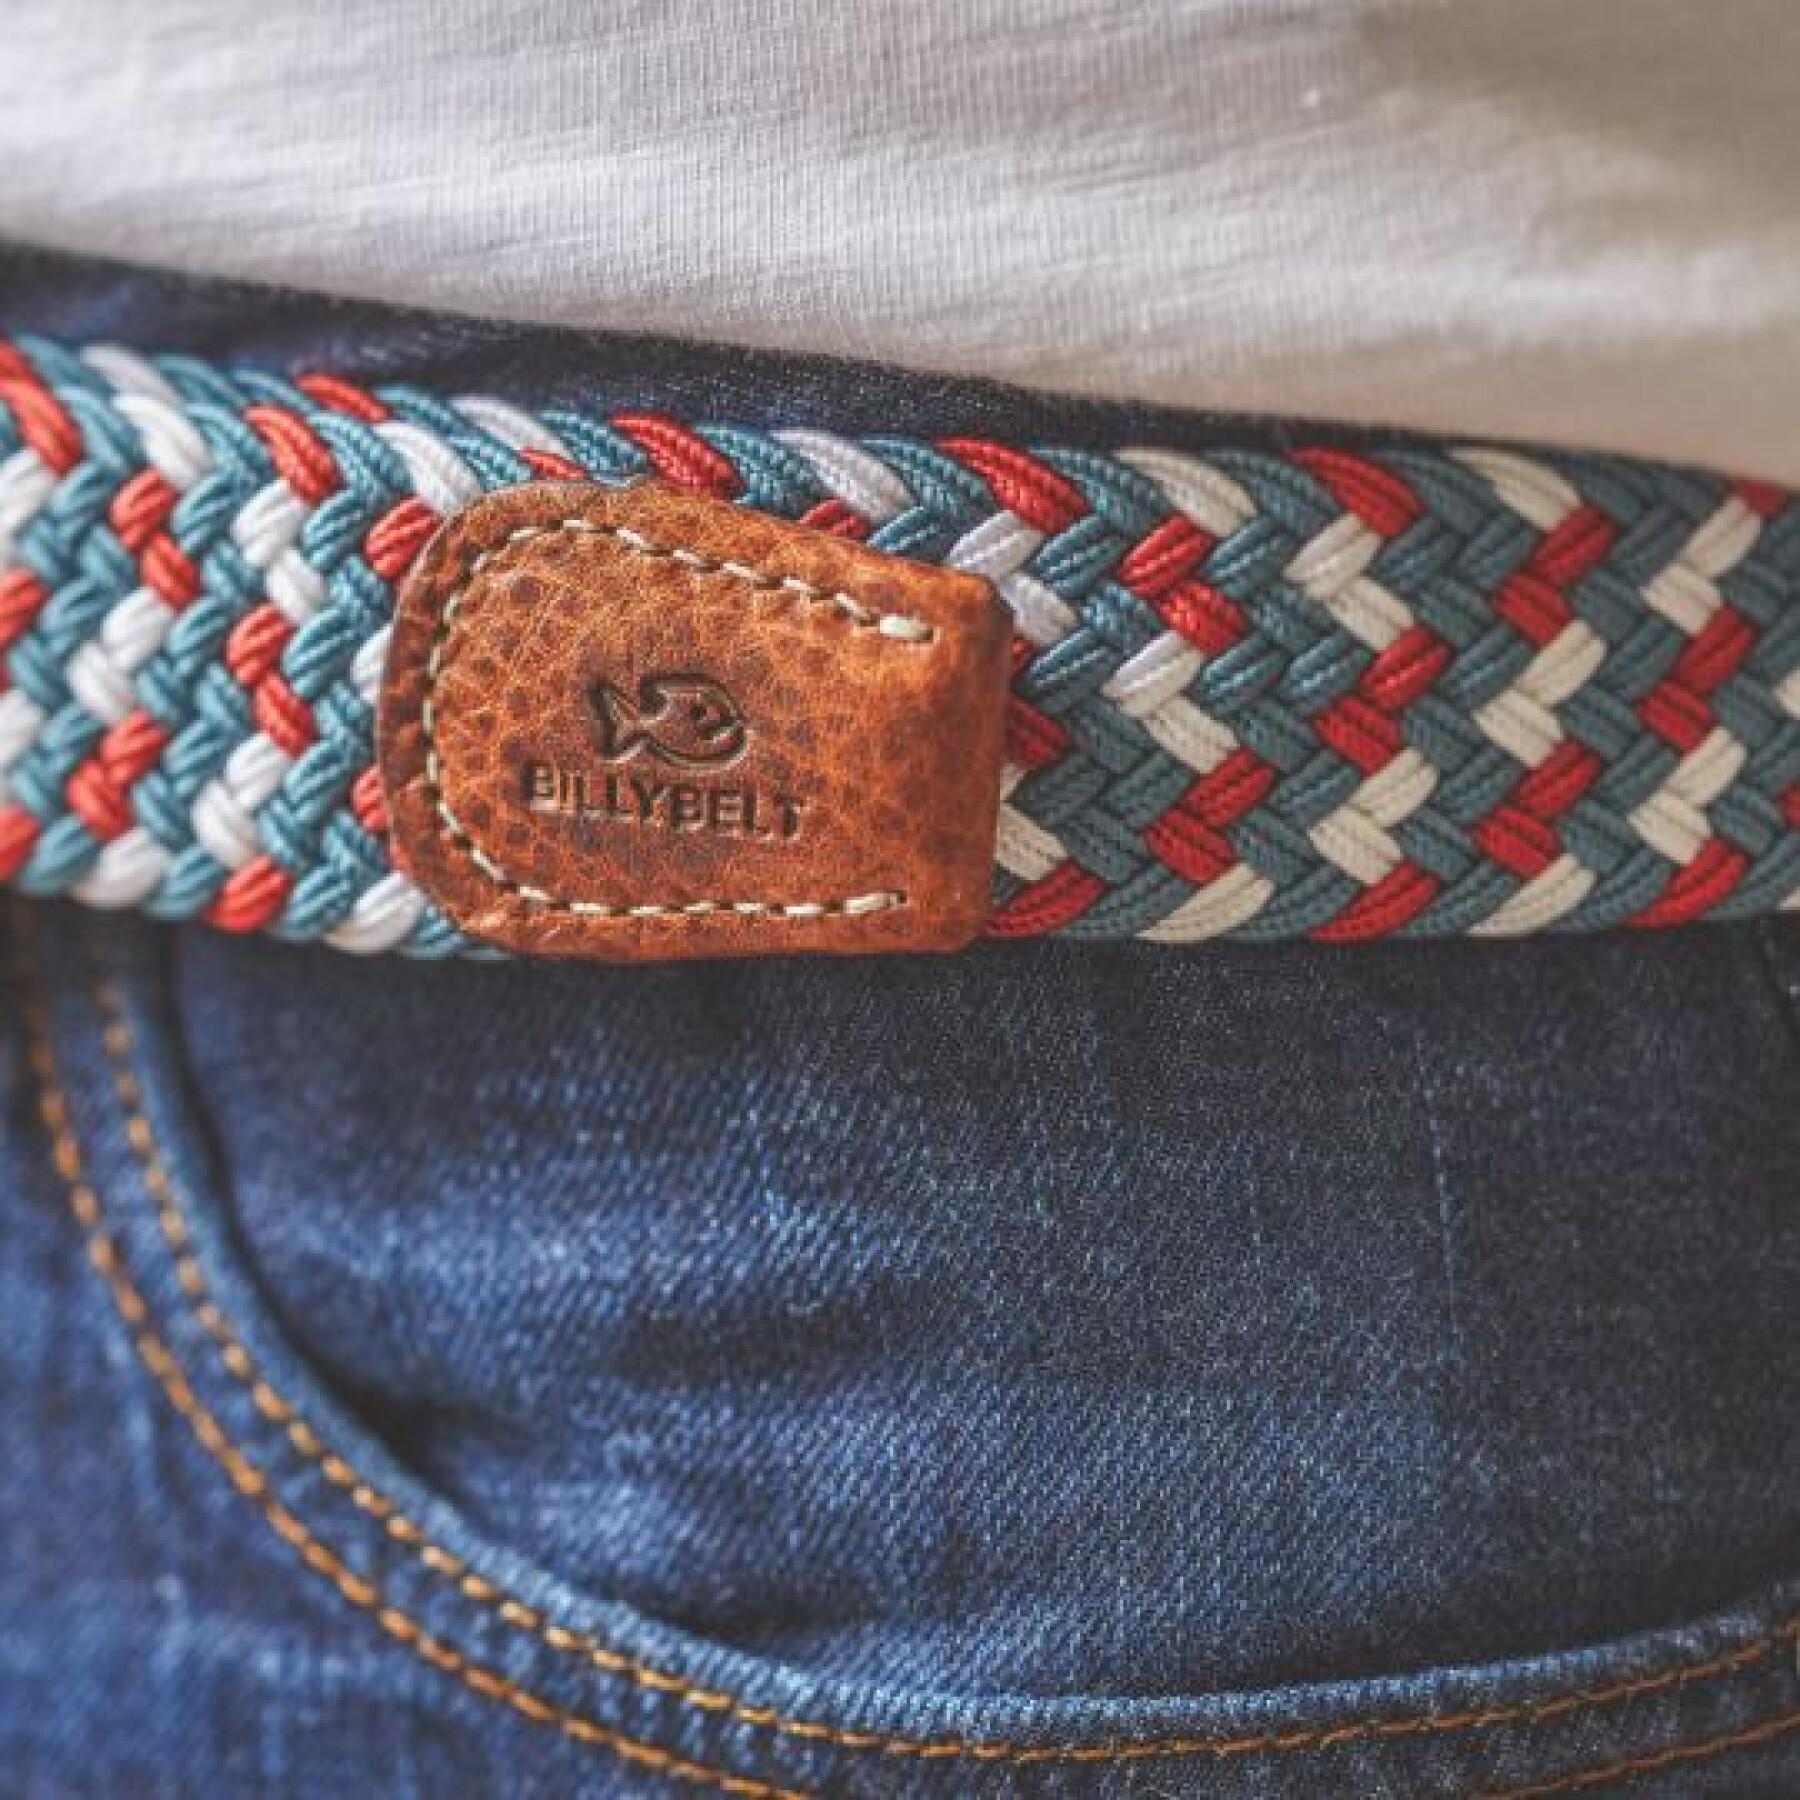 Elastic braided belt Billybelt La florence